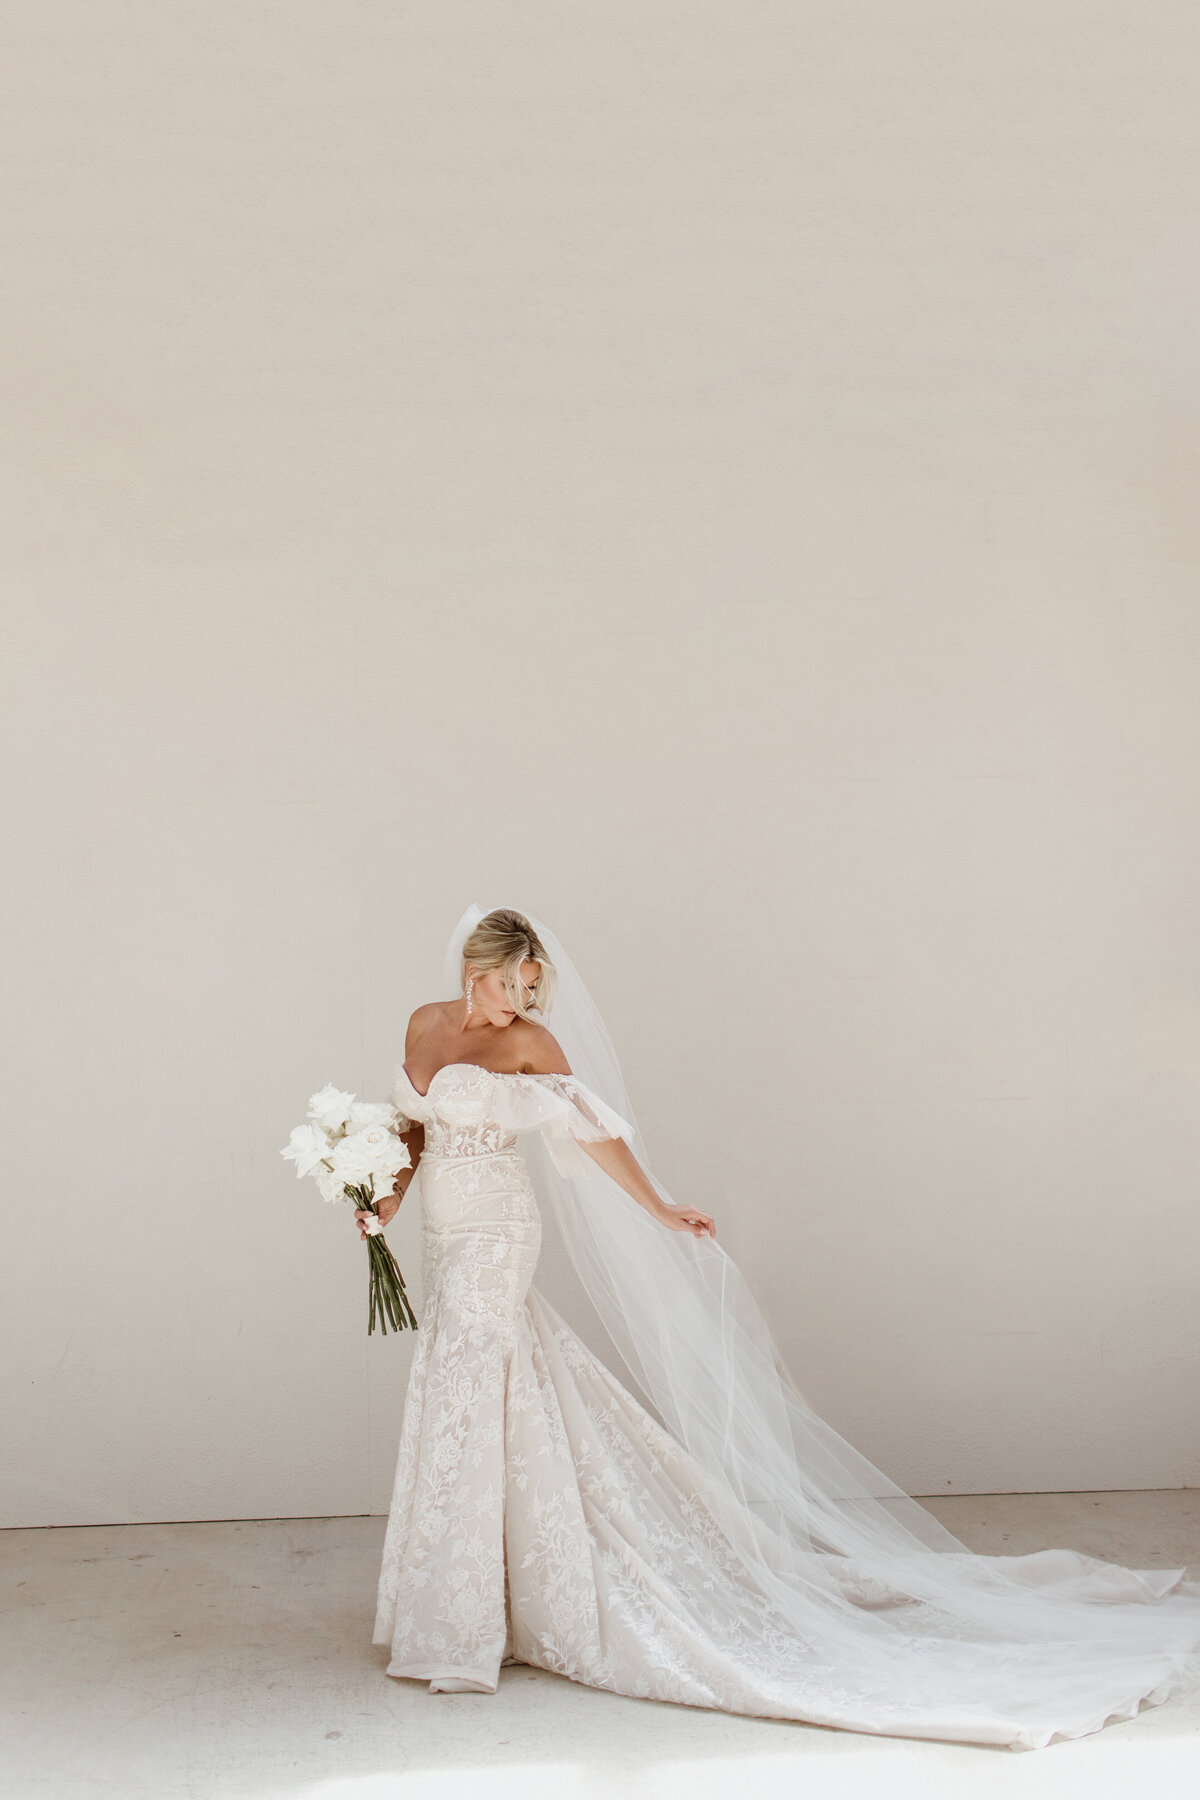 A stunning bride at Lazy S Hacienda in Weatherford Texas. Captured by Fort Worth Wedding Photographer, Megan Christine Studio